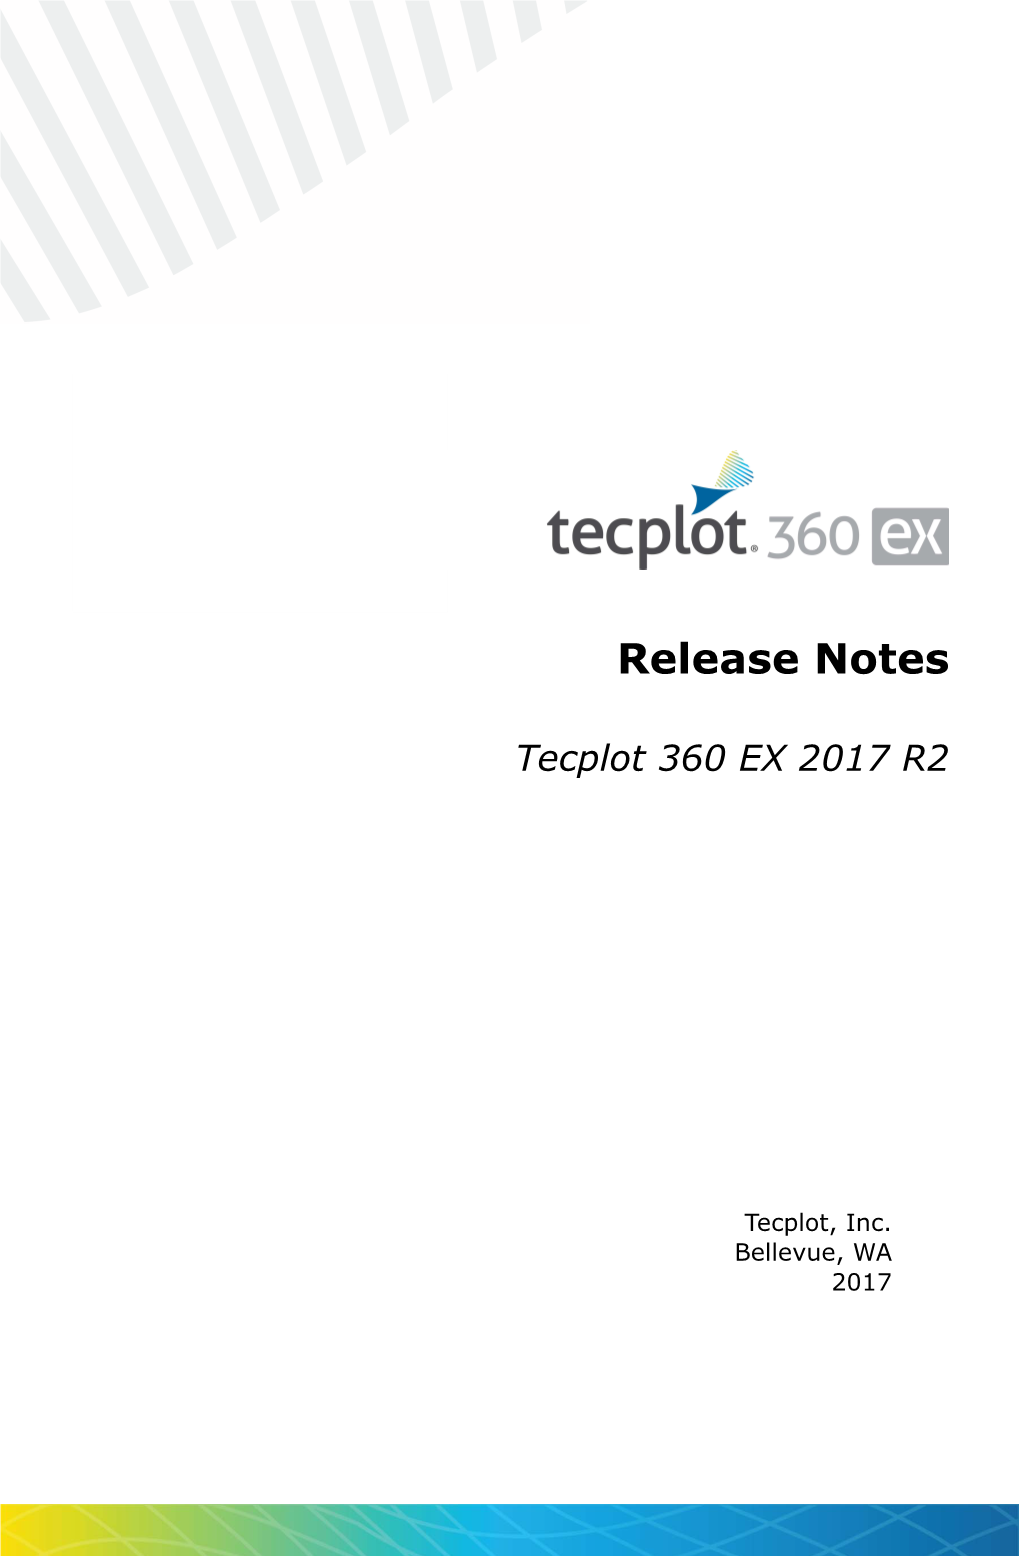 Tecplot 360 Release Notes